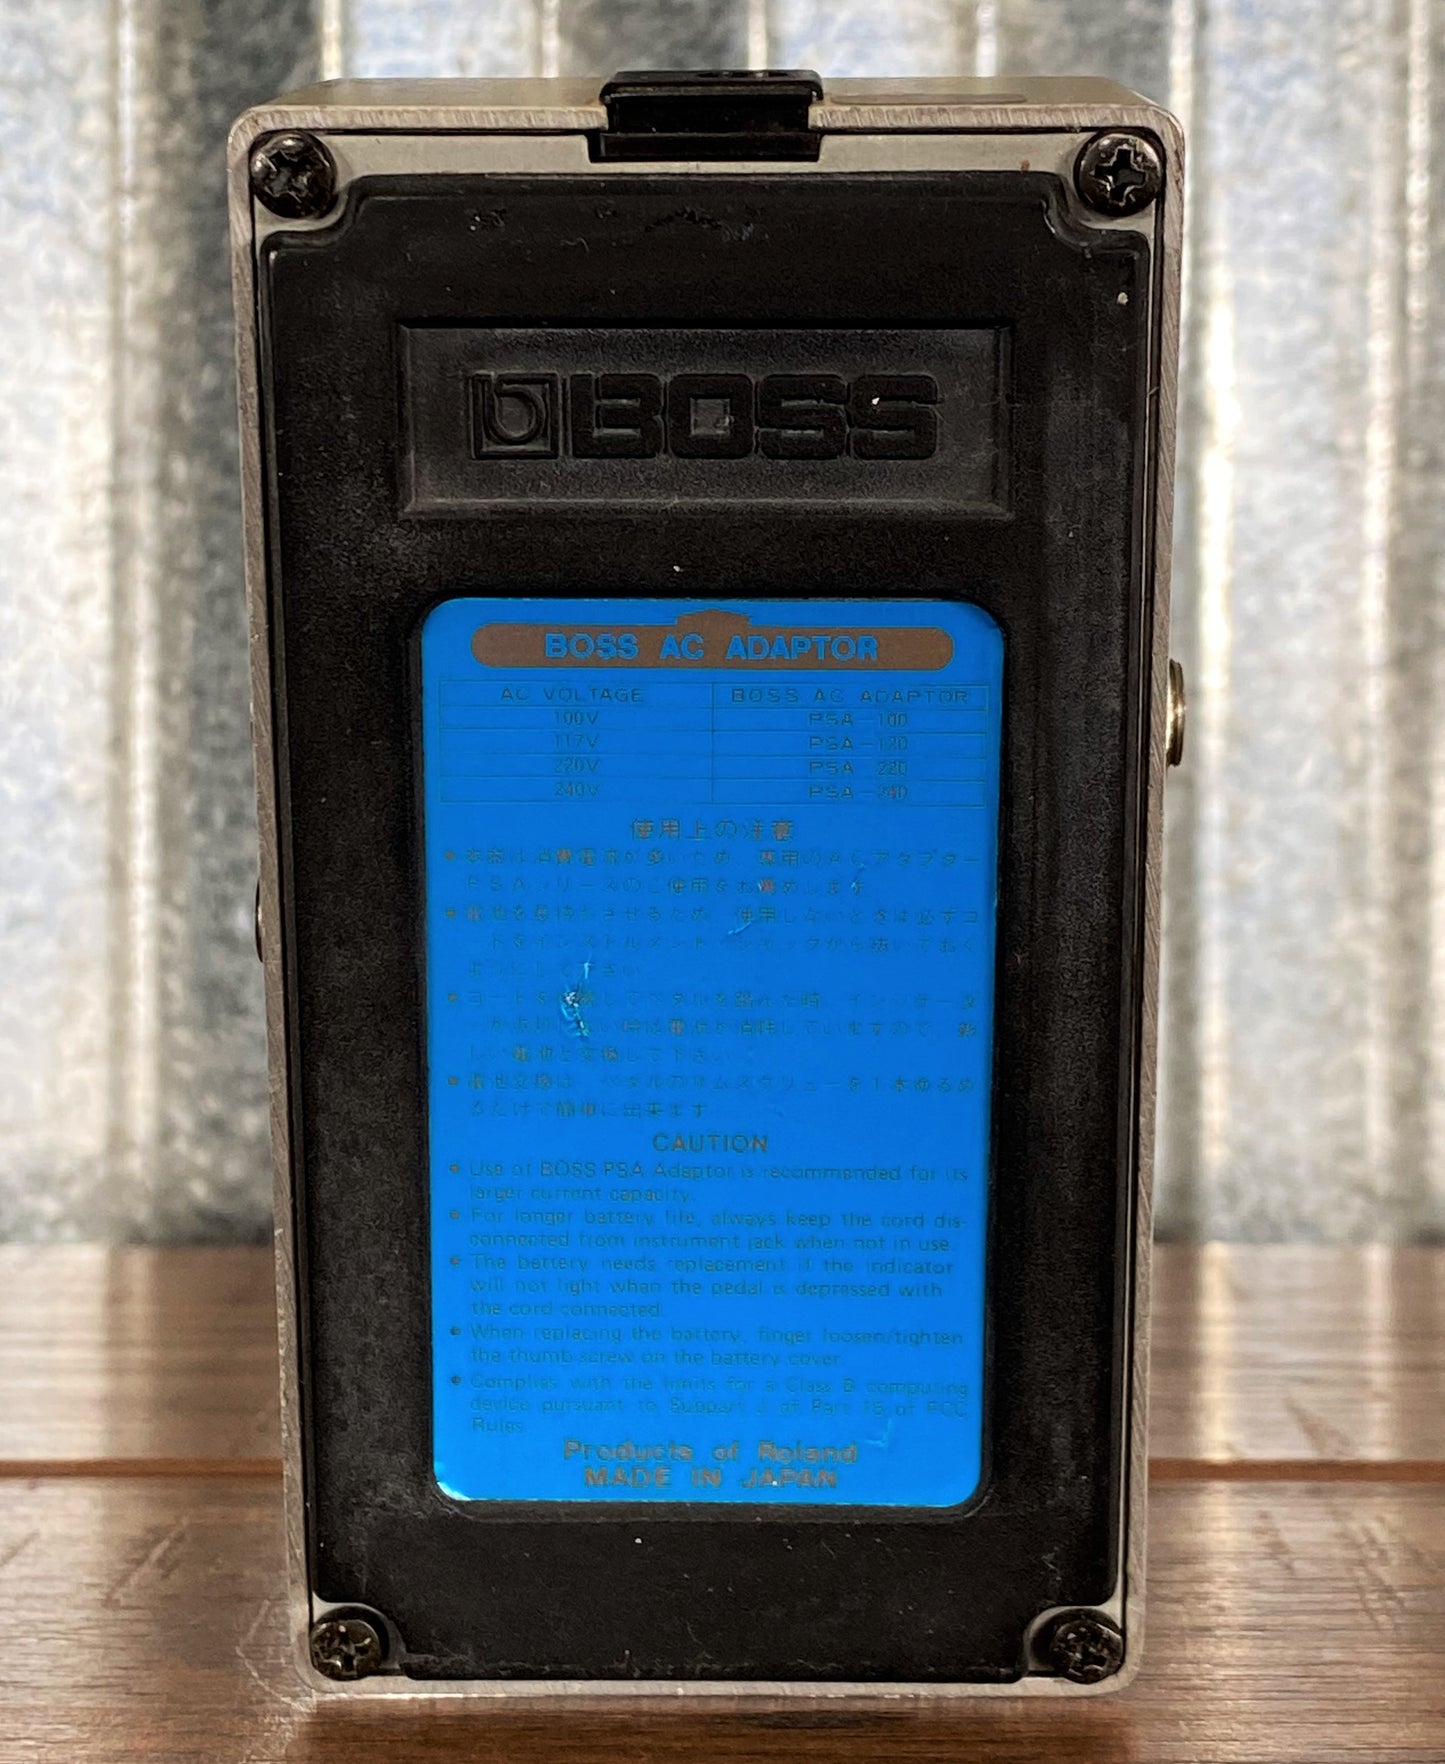 Boss DD-2 Digital Delay Guitar Effect Pedal Japan Blue Label Used